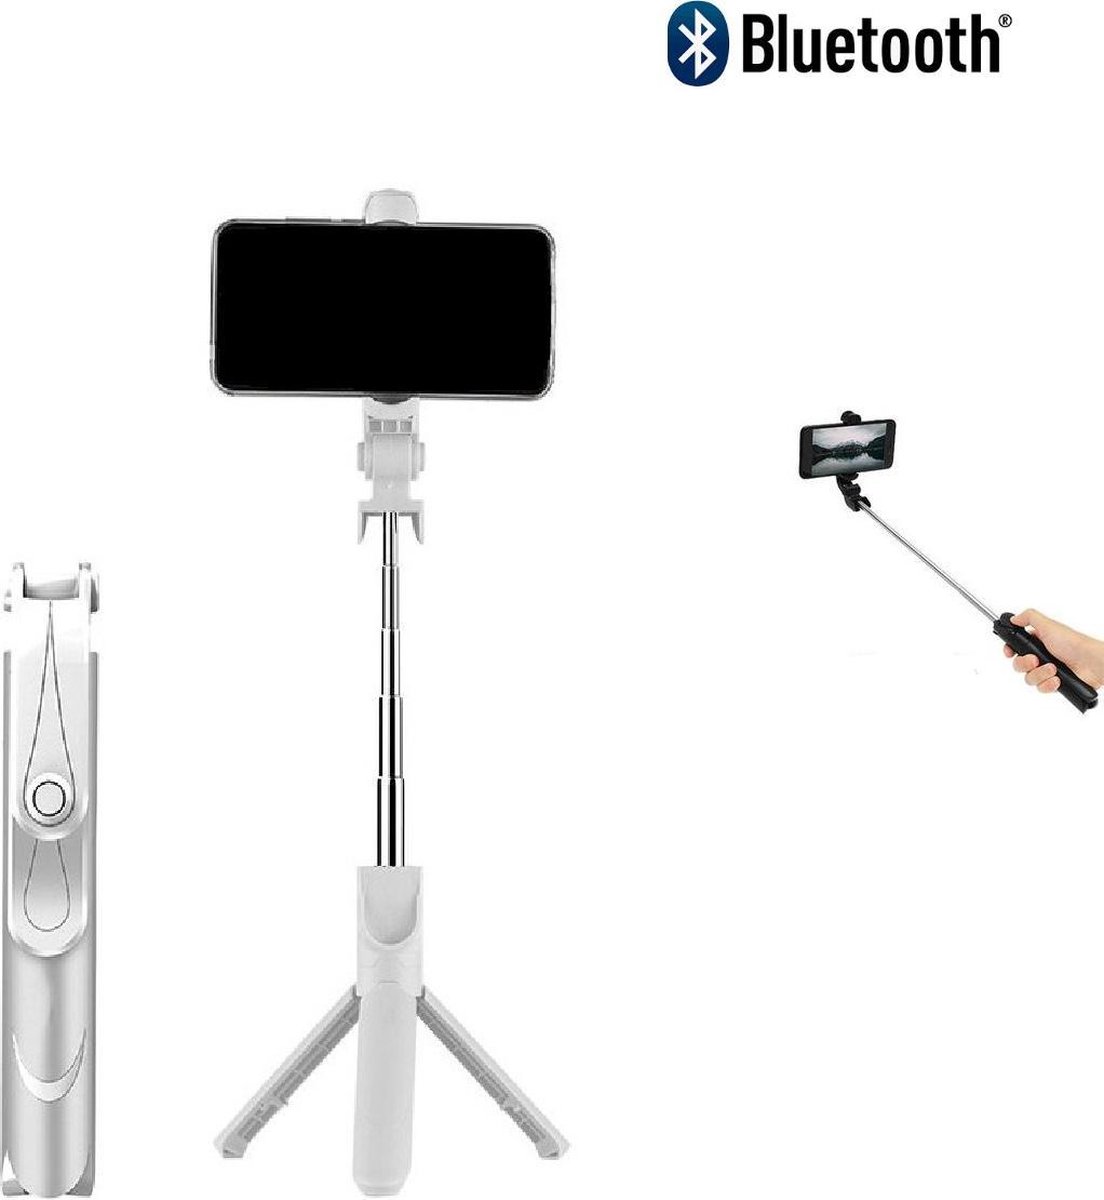 DrPhone Z1 Bluetooth draadloze Tripod VLOG - Wit - Inklapbare Tripod Selfie Stick - Tripod Statief houder - Opvouwbaar + Bluetooth remote control - Voor o.a iPhone 11 / Pro Max / XS / XR / Samsung A50 / A40 / S10 / S9 / HUAWEI P30 etc